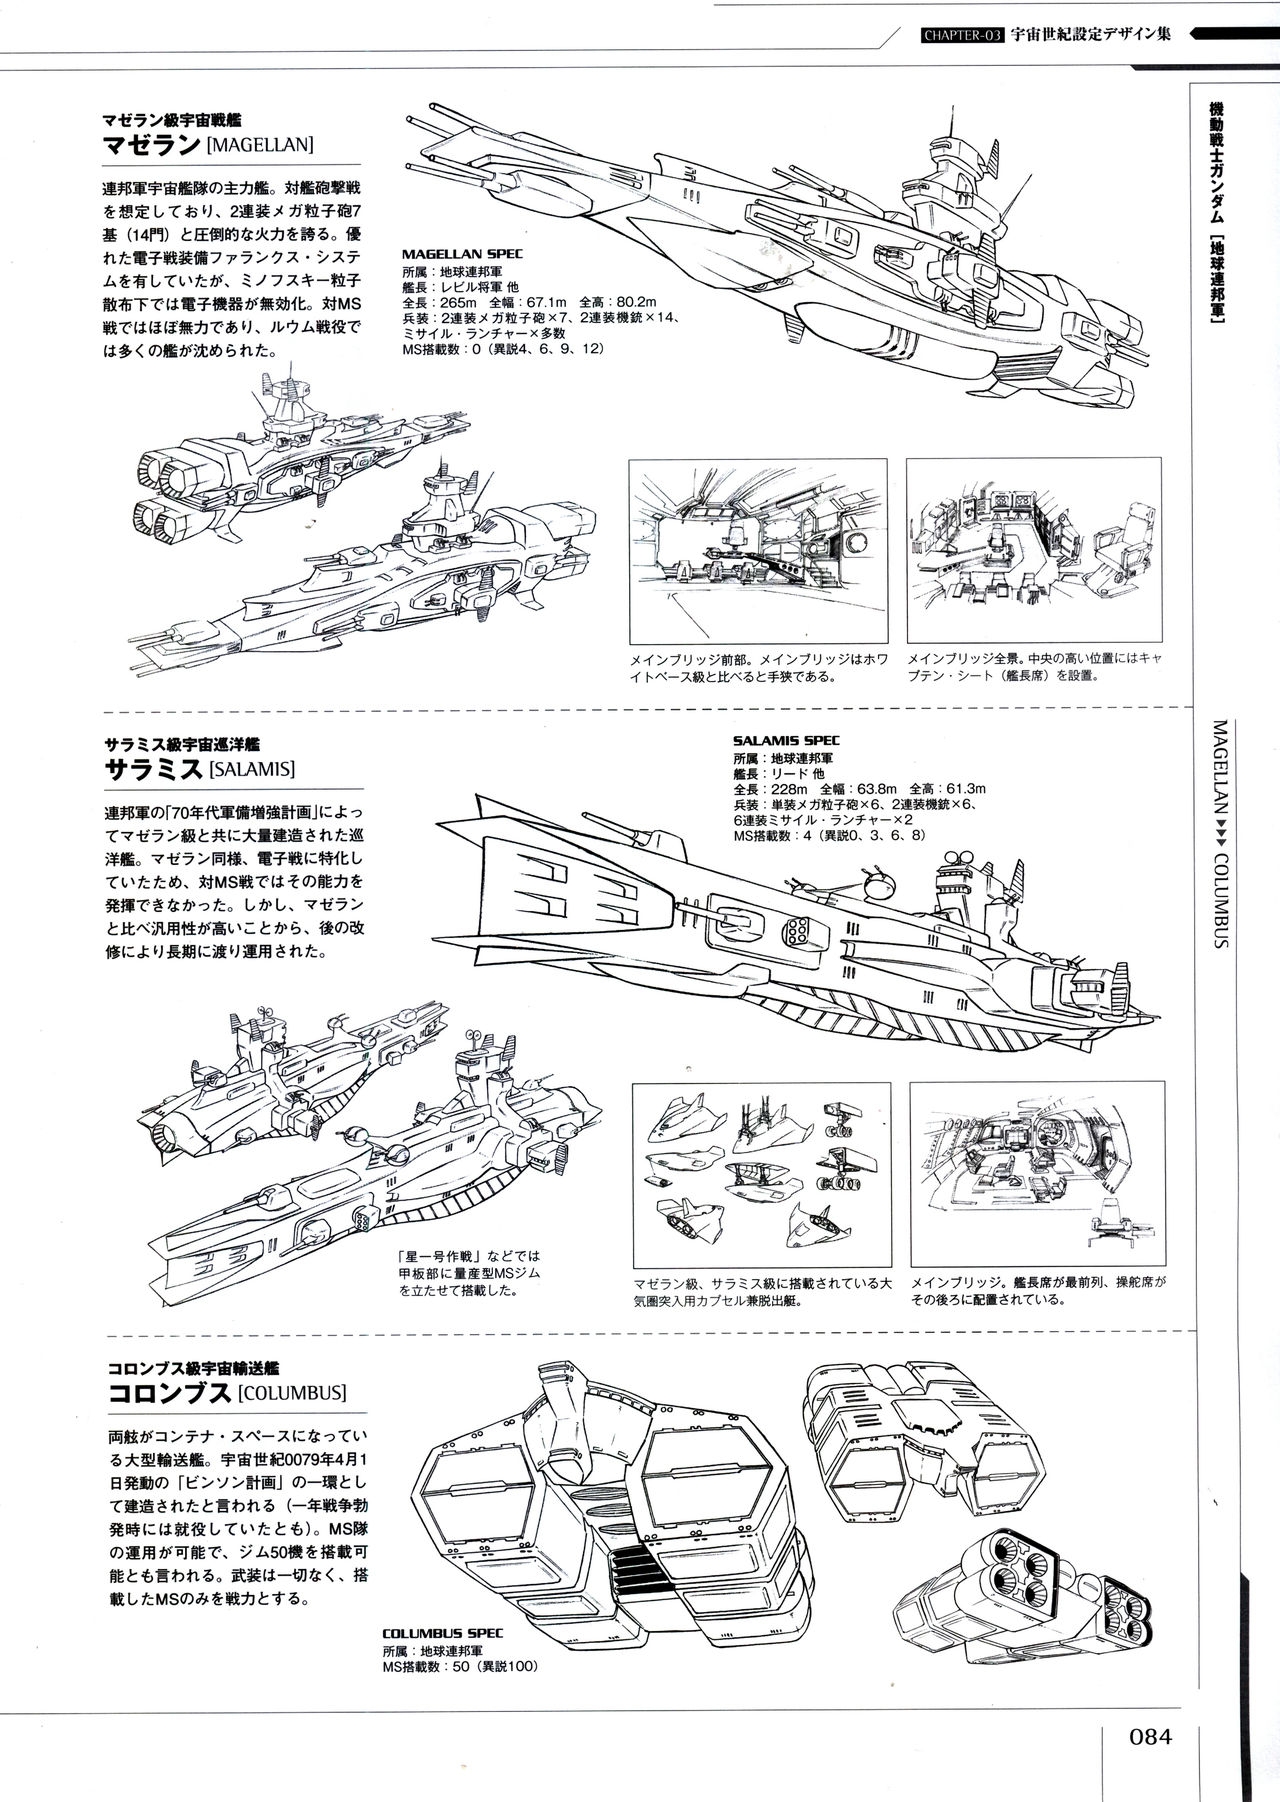 Mobile Suit Gundam - Ship & Aerospace Plane Encyclopedia - Revised Edition 89